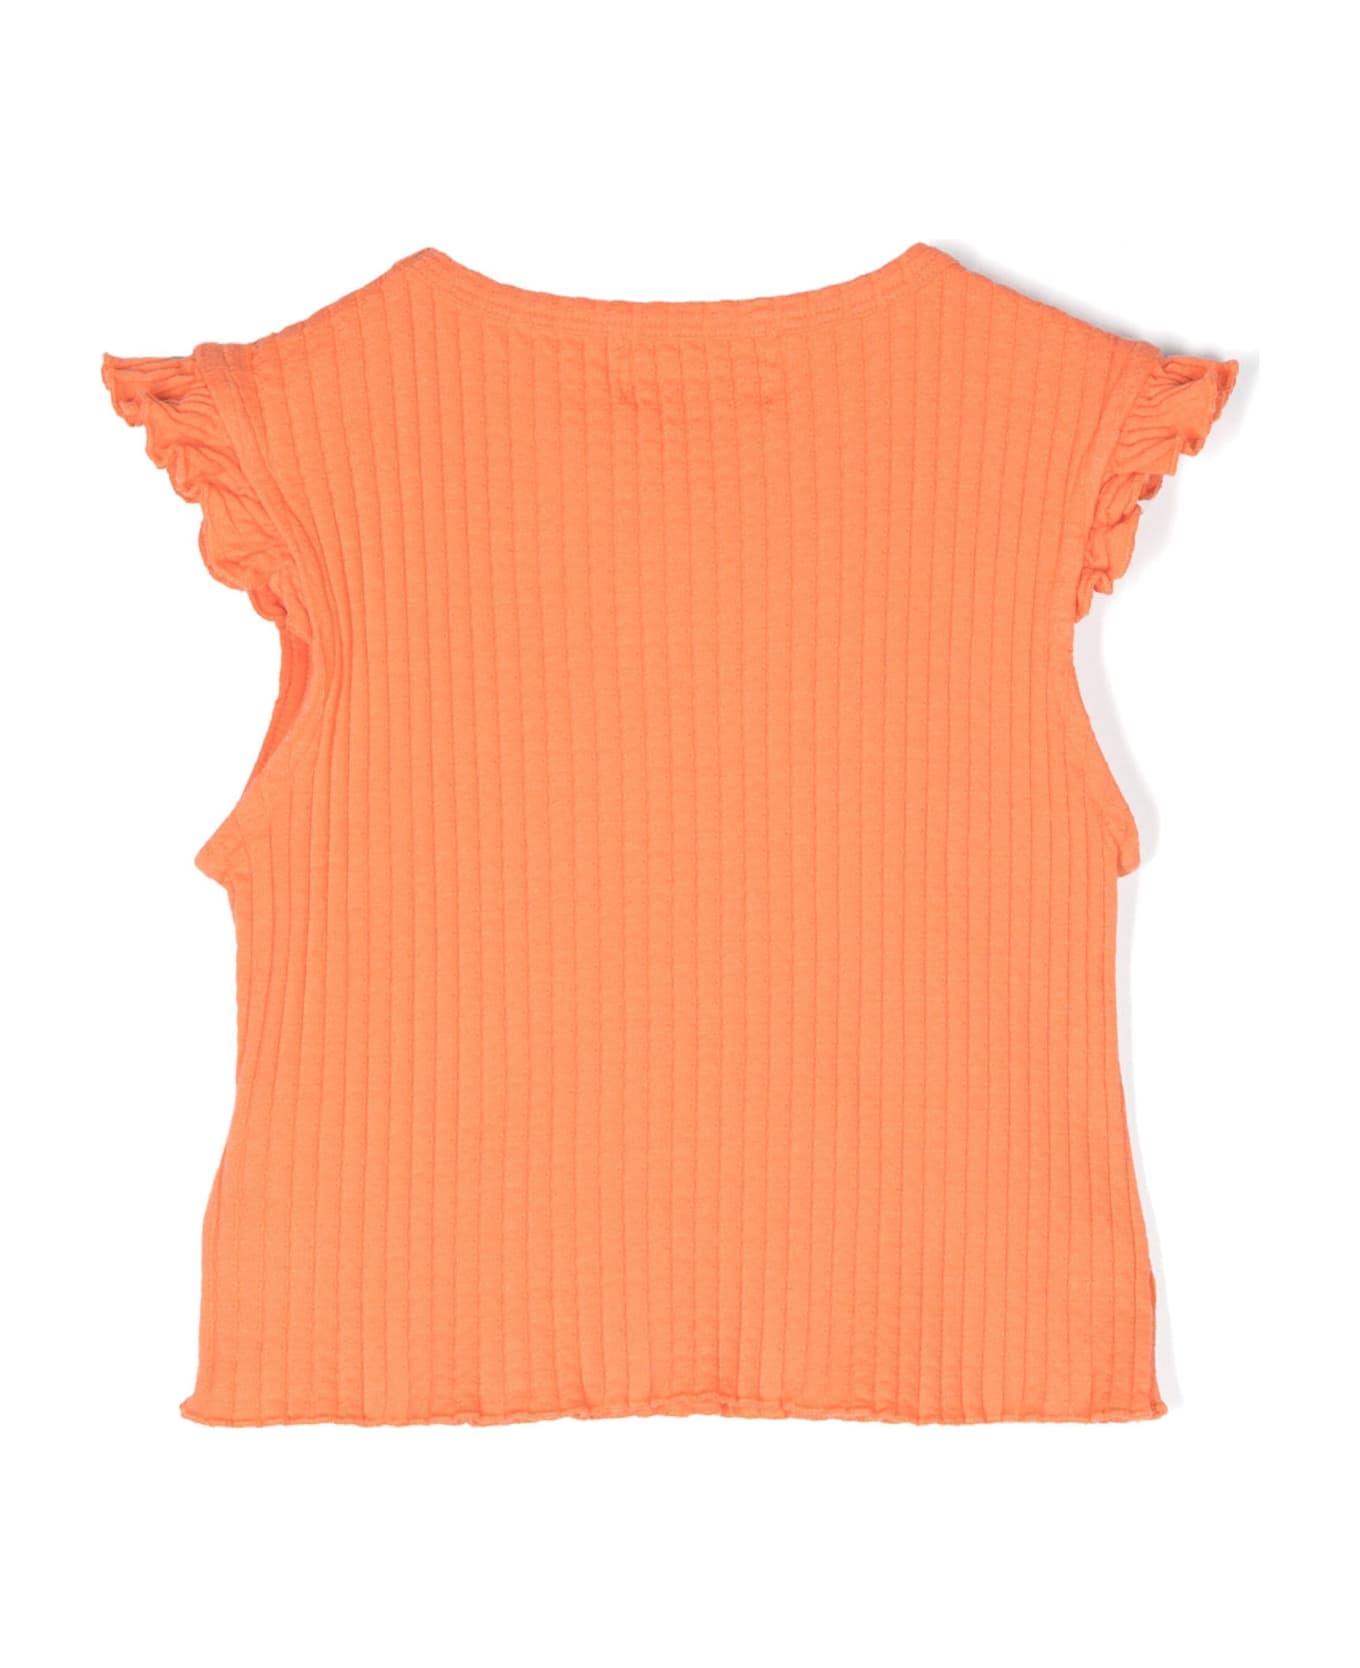 Bobo Choses Orange Top For Girl With Logo - Orange